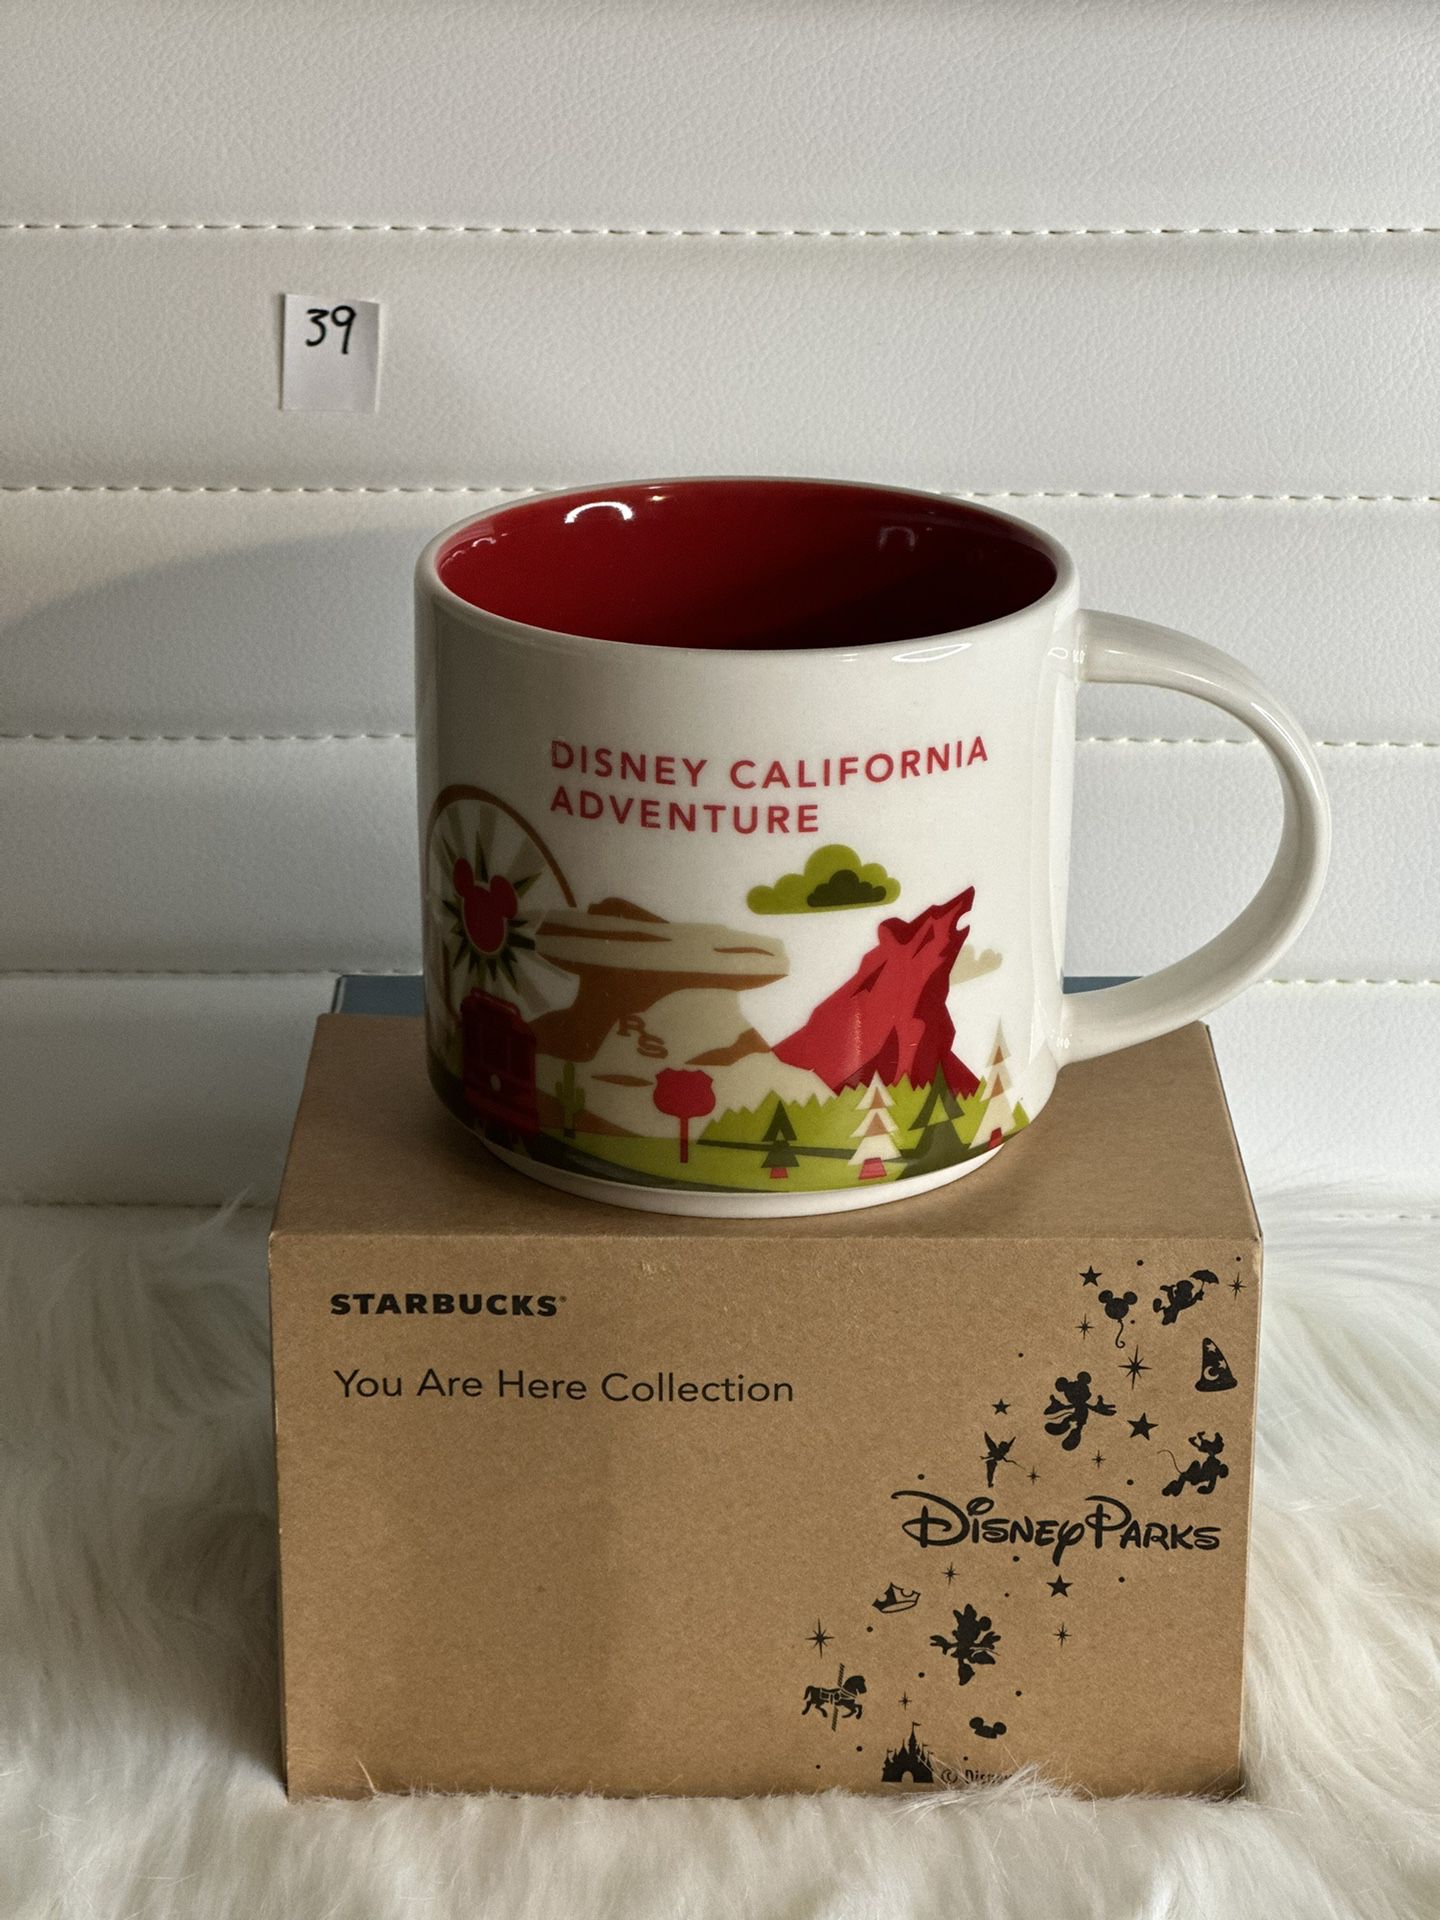 Starbucks Disney California Adventure “You Are Here” Collection Mug